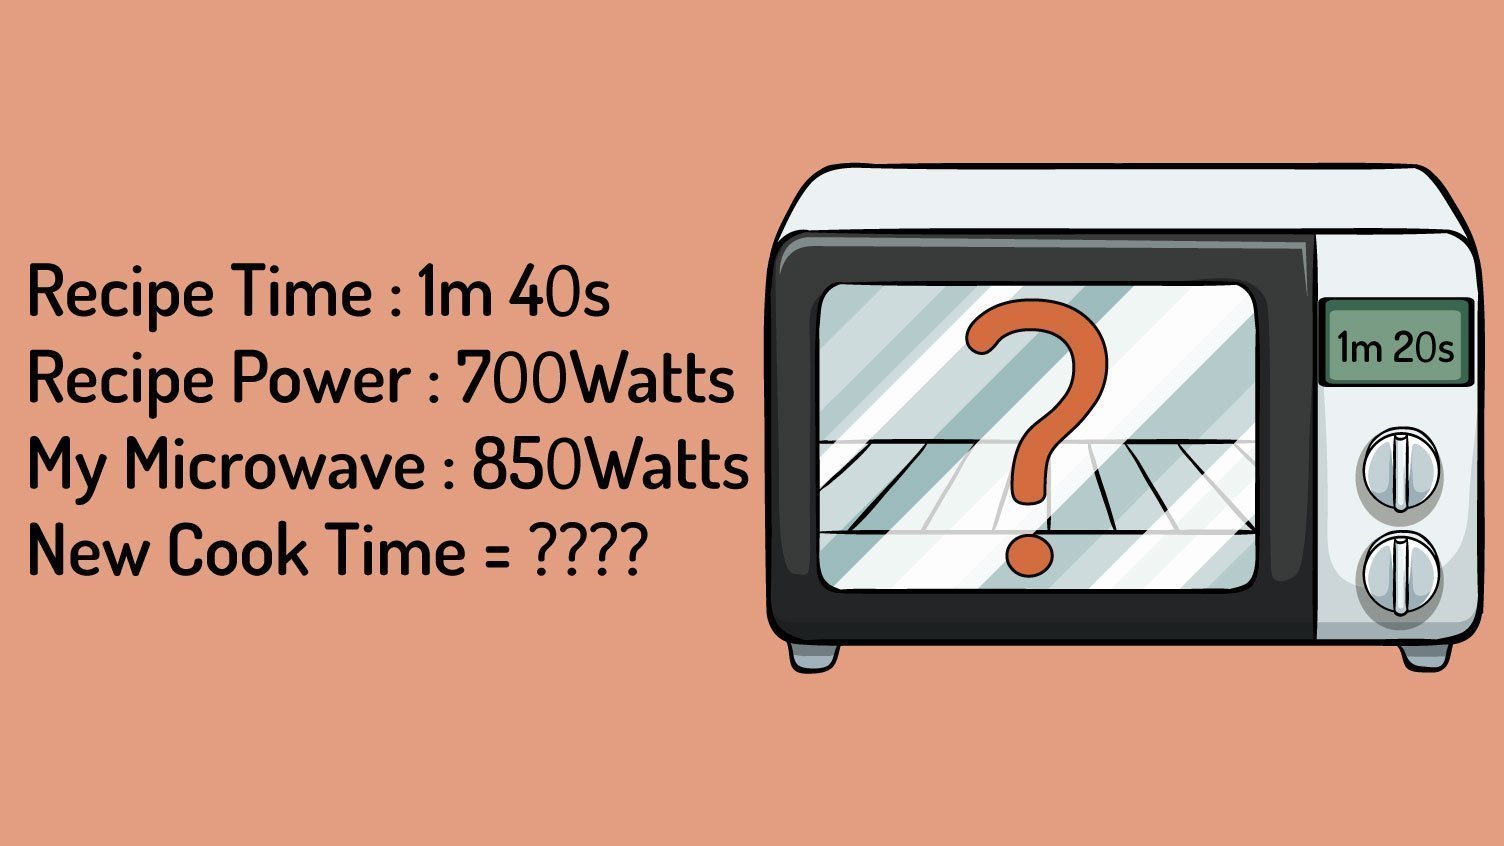 Microwave Conversion Chart 700-watts to 1000-watts